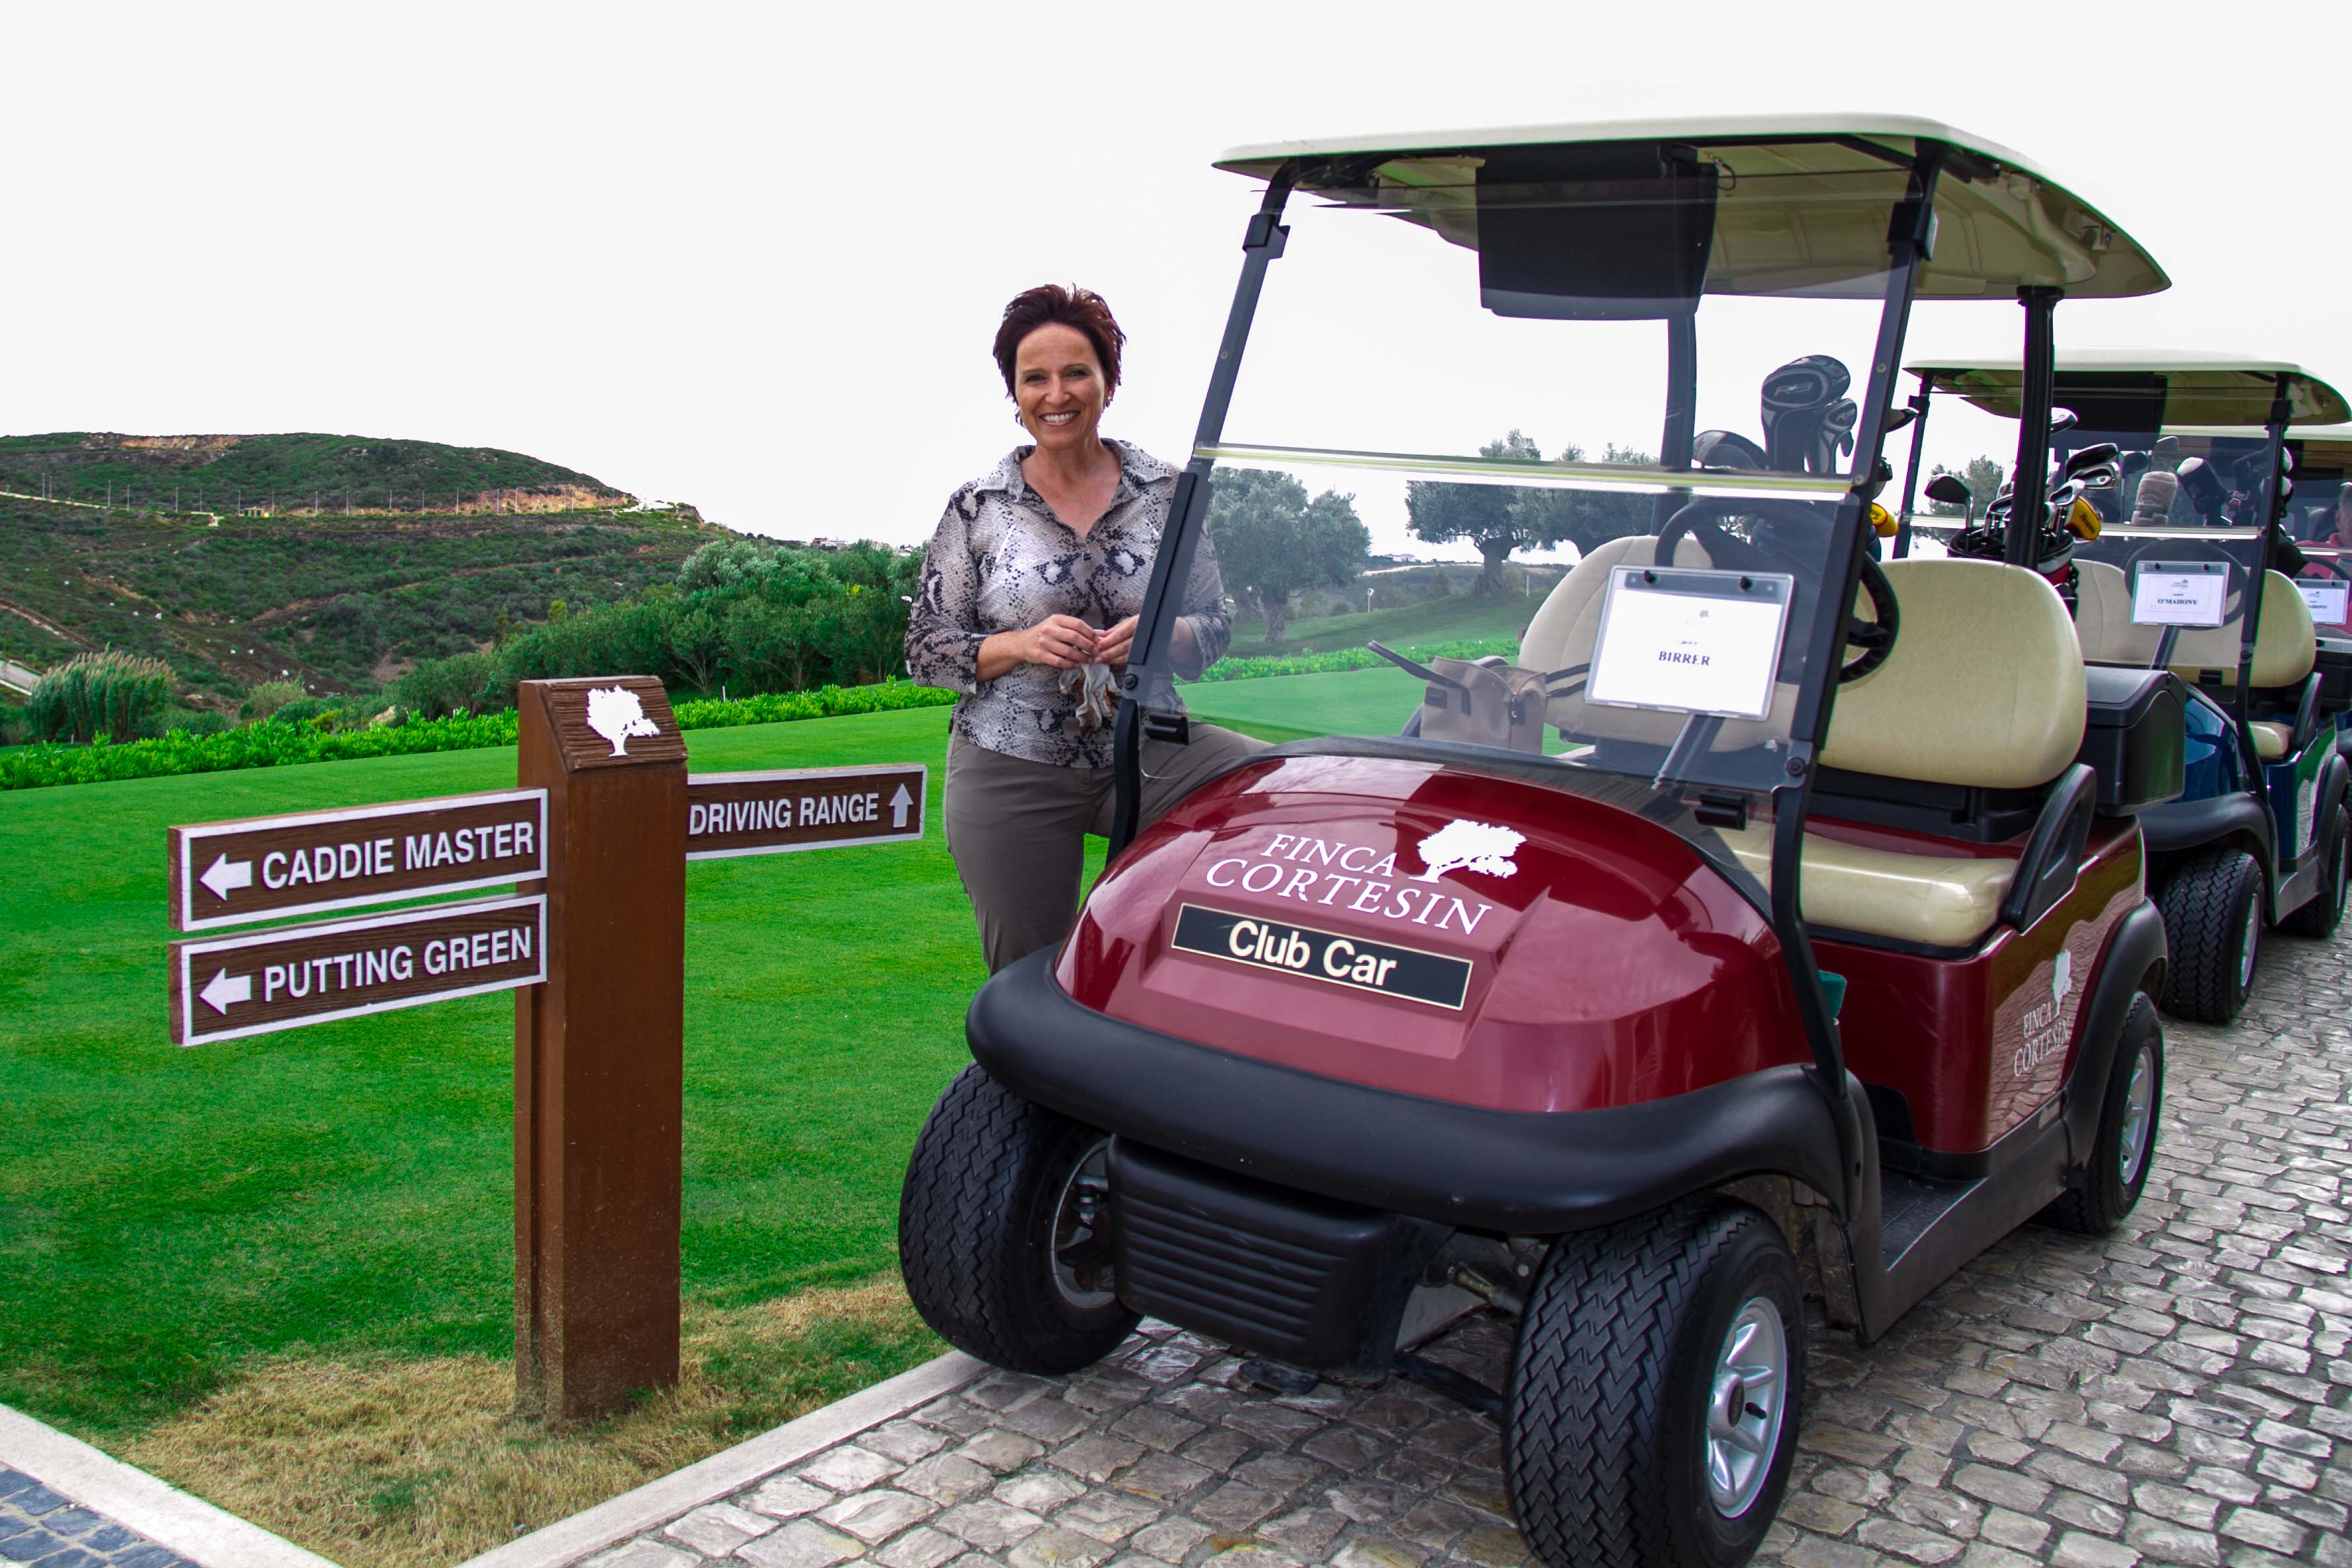 Katja on a golf buggy in Finca Cortesin golf course